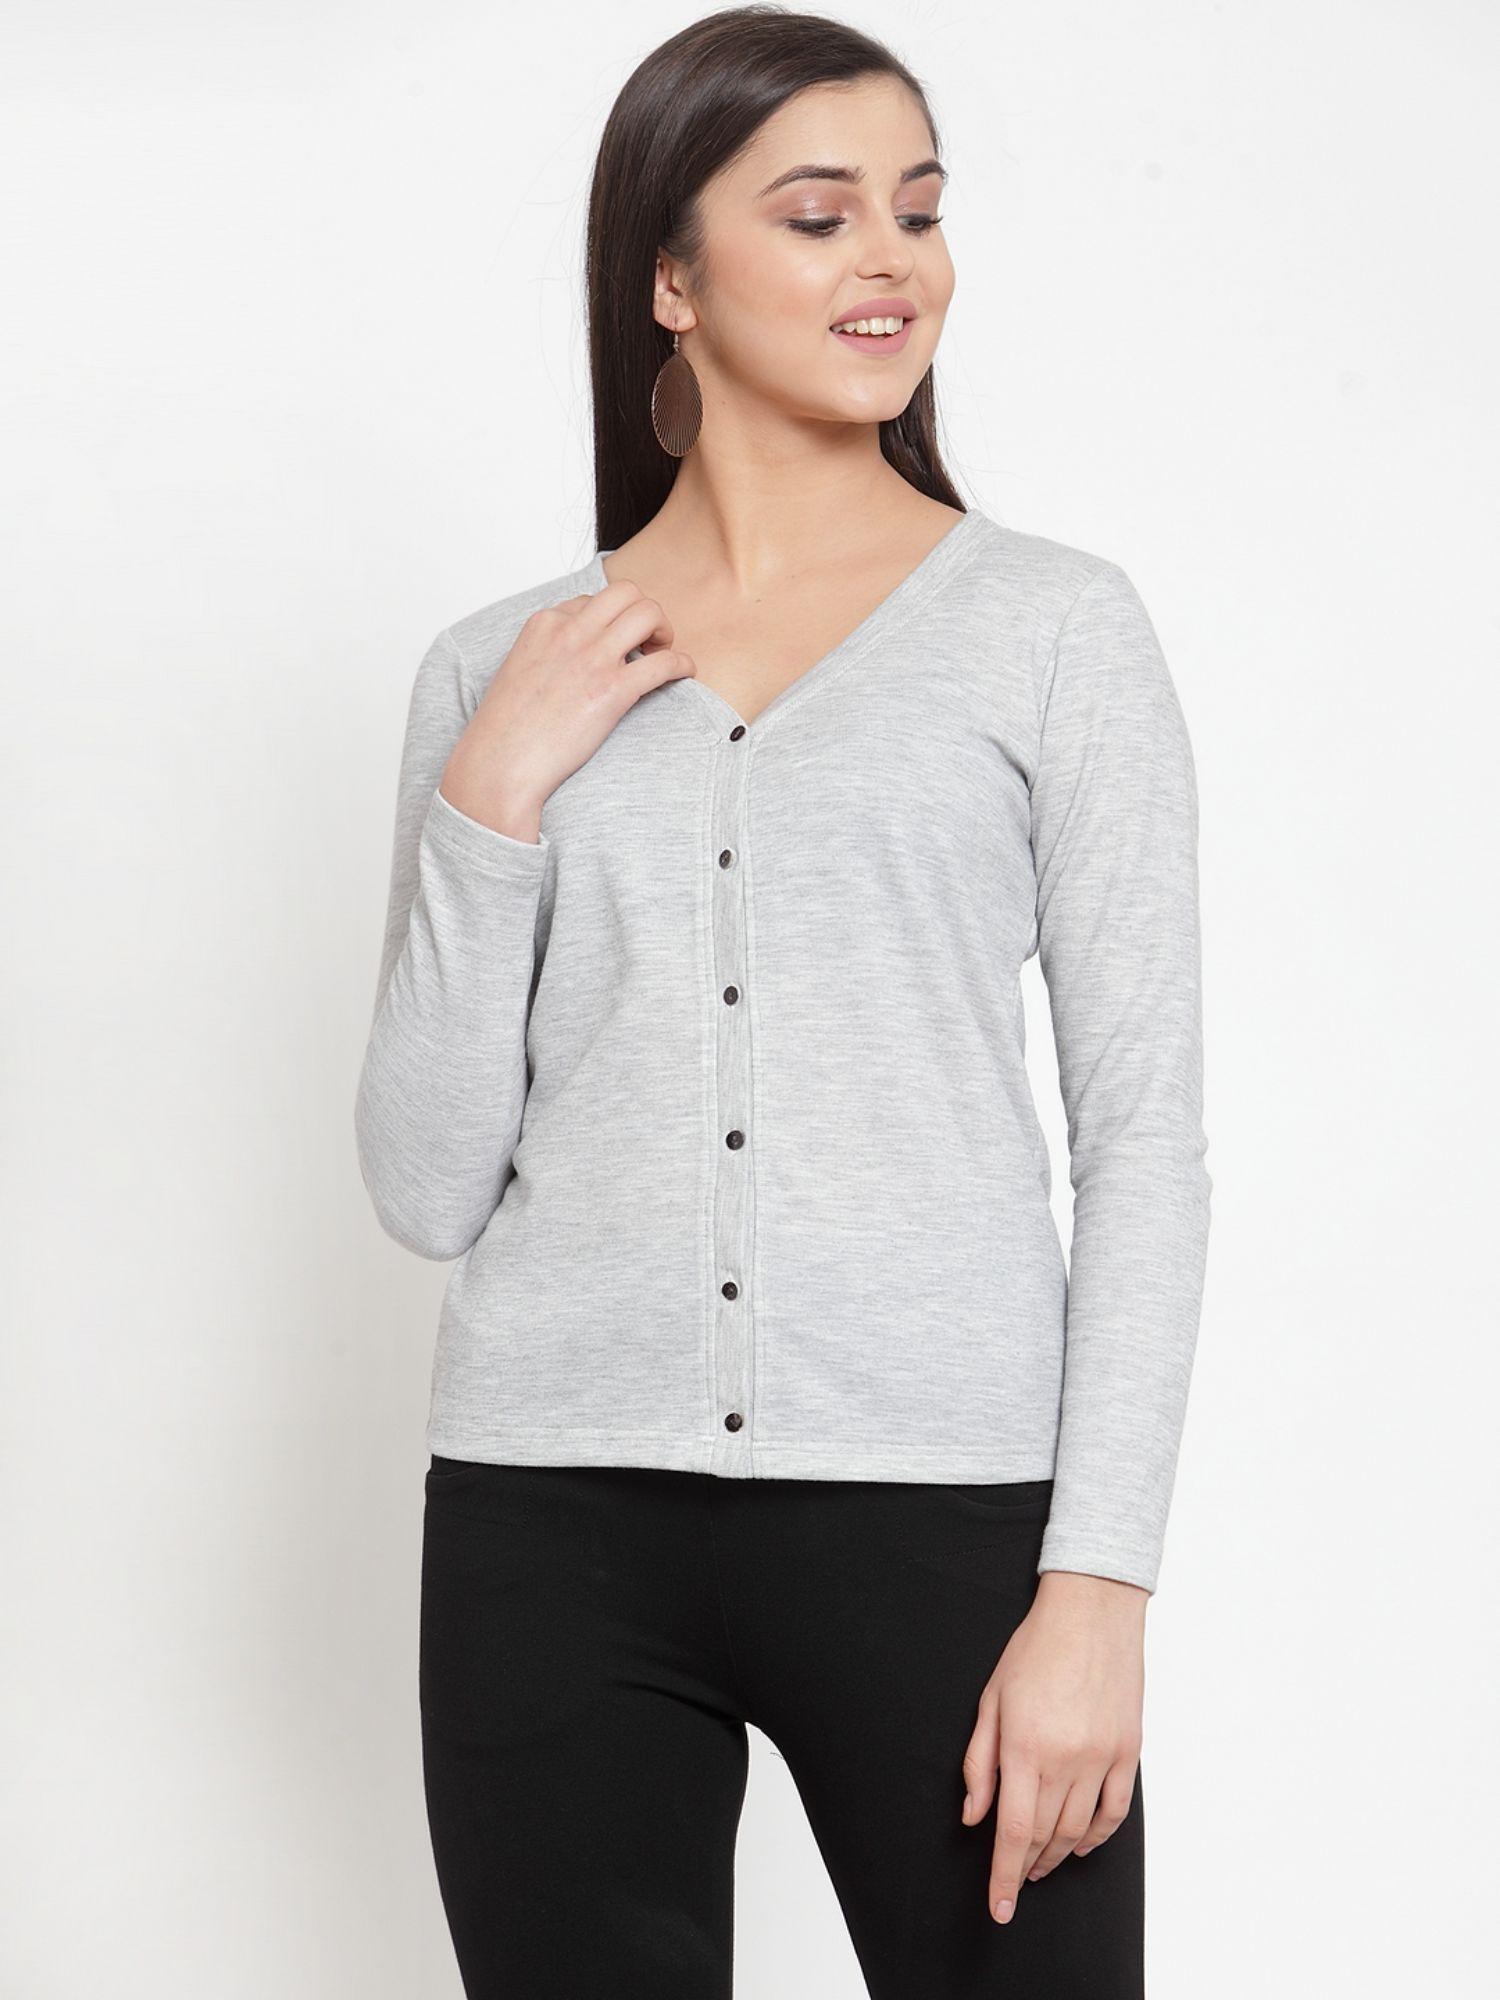 women grey solid cardigan sweater